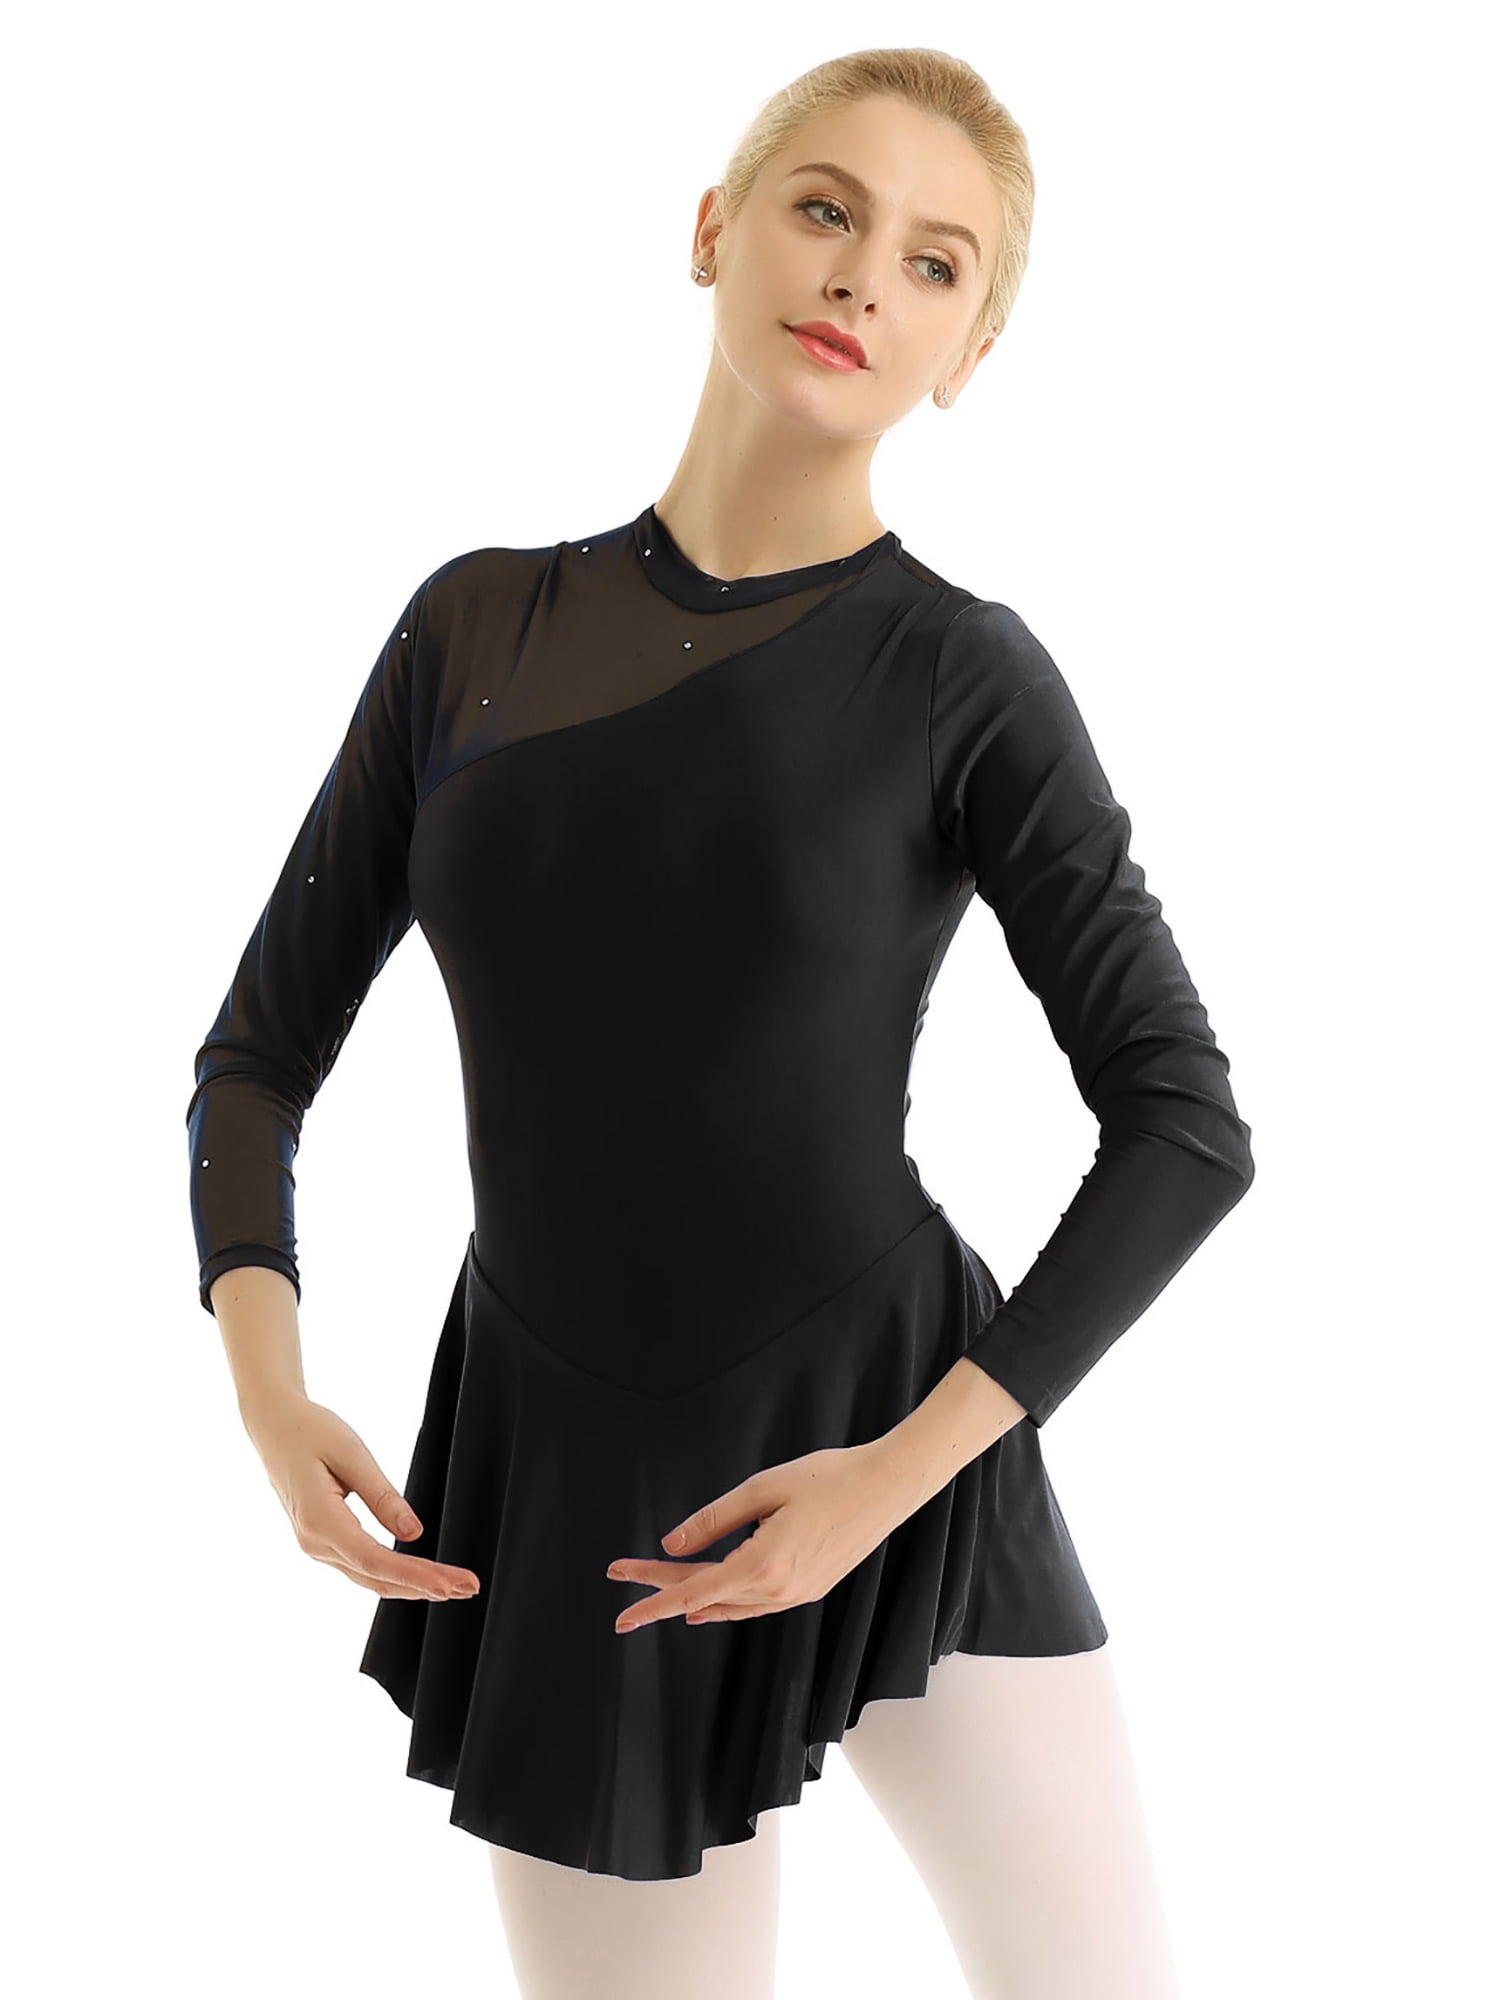 CHICTRY Womens Ballet Dance Leotard Spandex Gymnastics Long Sleeve Figure Ice Skating Dresses